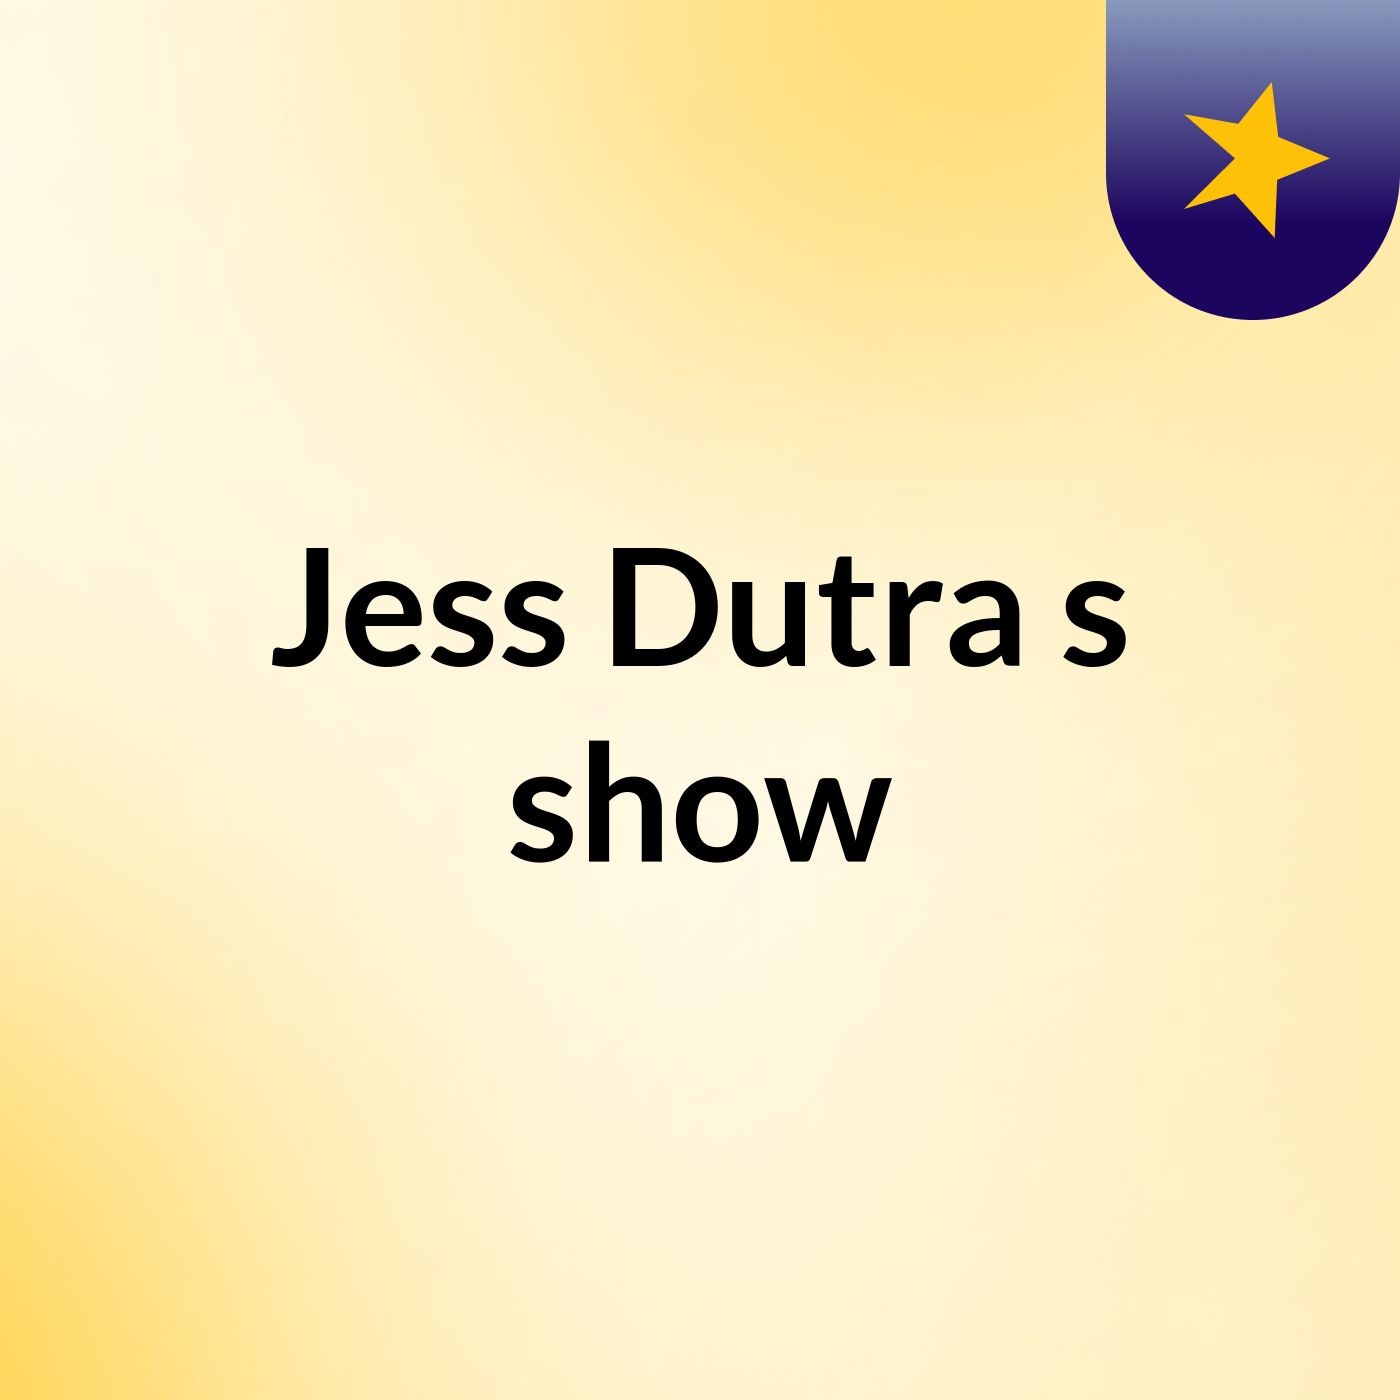 Jess Dutra's show